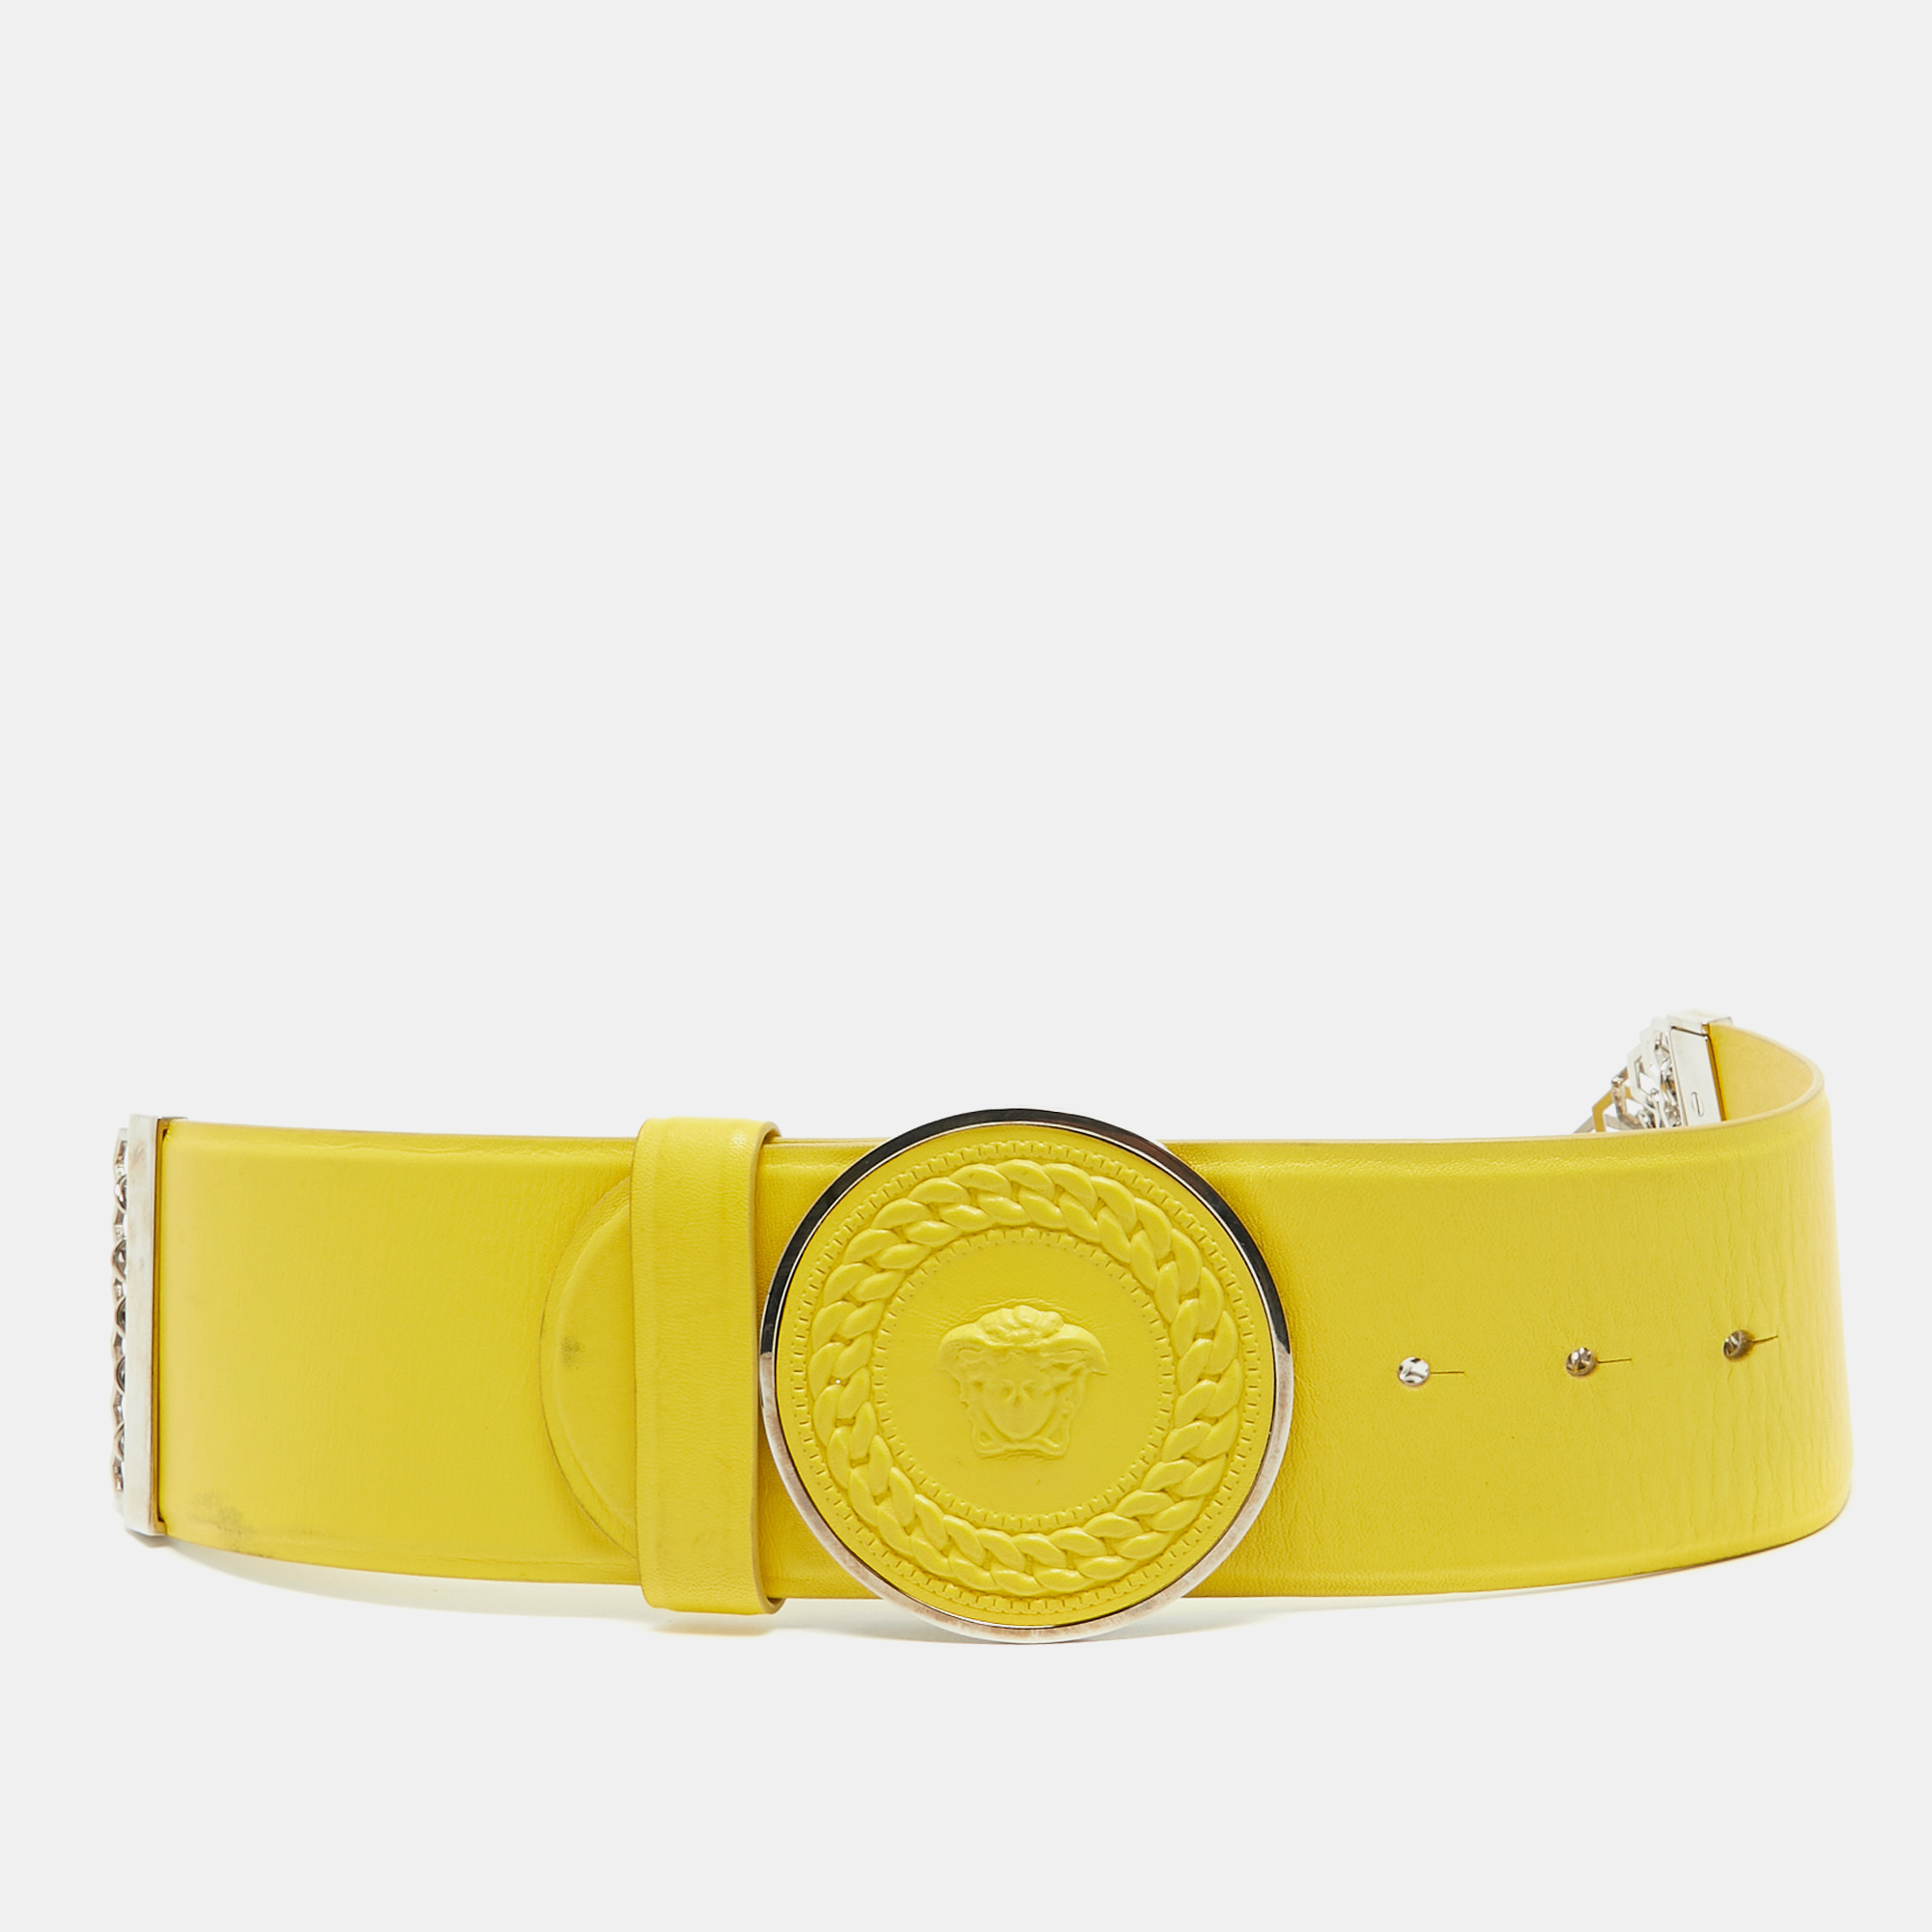 Versace yellow leather and chainlink medussa round belt 75cm